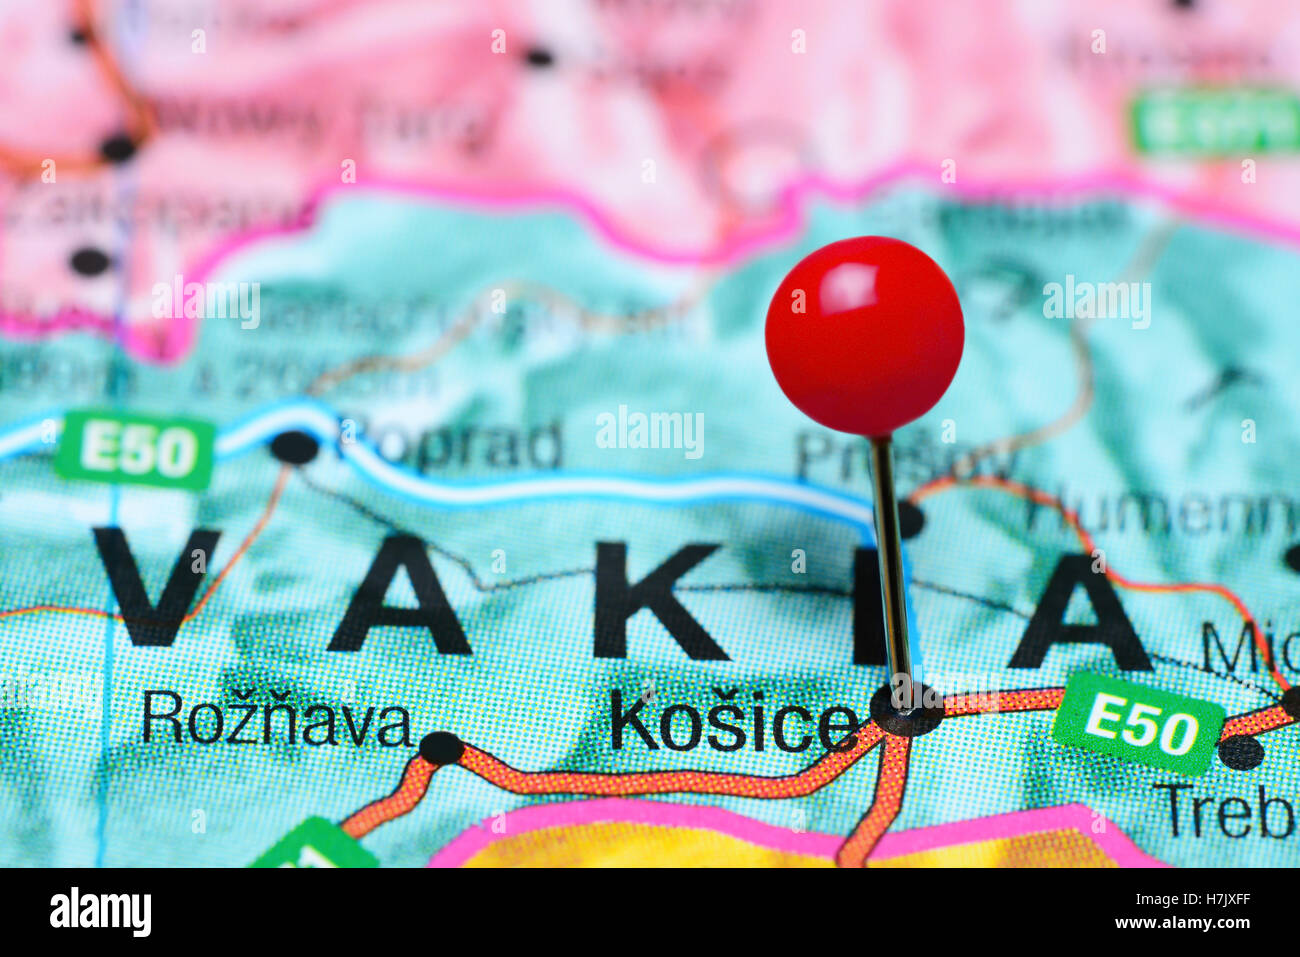 Kosice pinned on a map of Slovakia Stock Photo